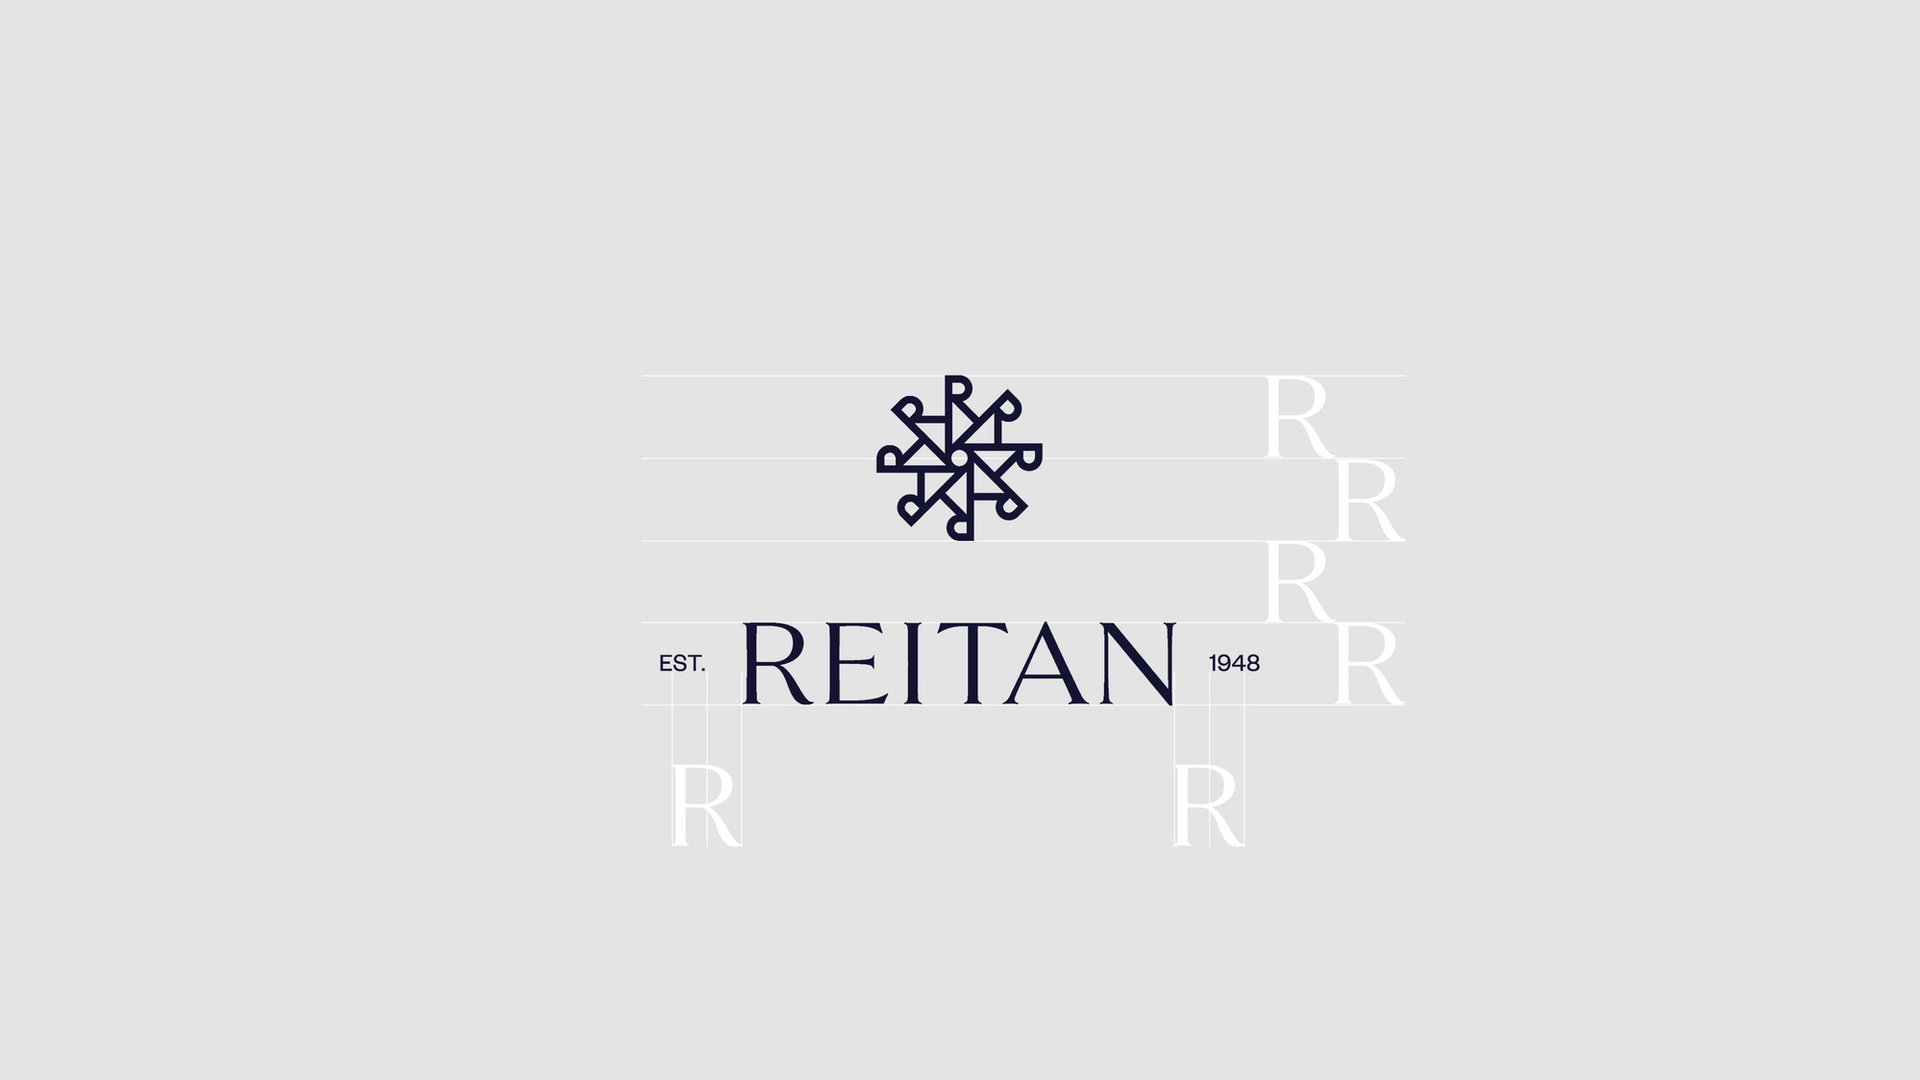 Reitan structure of primary logo